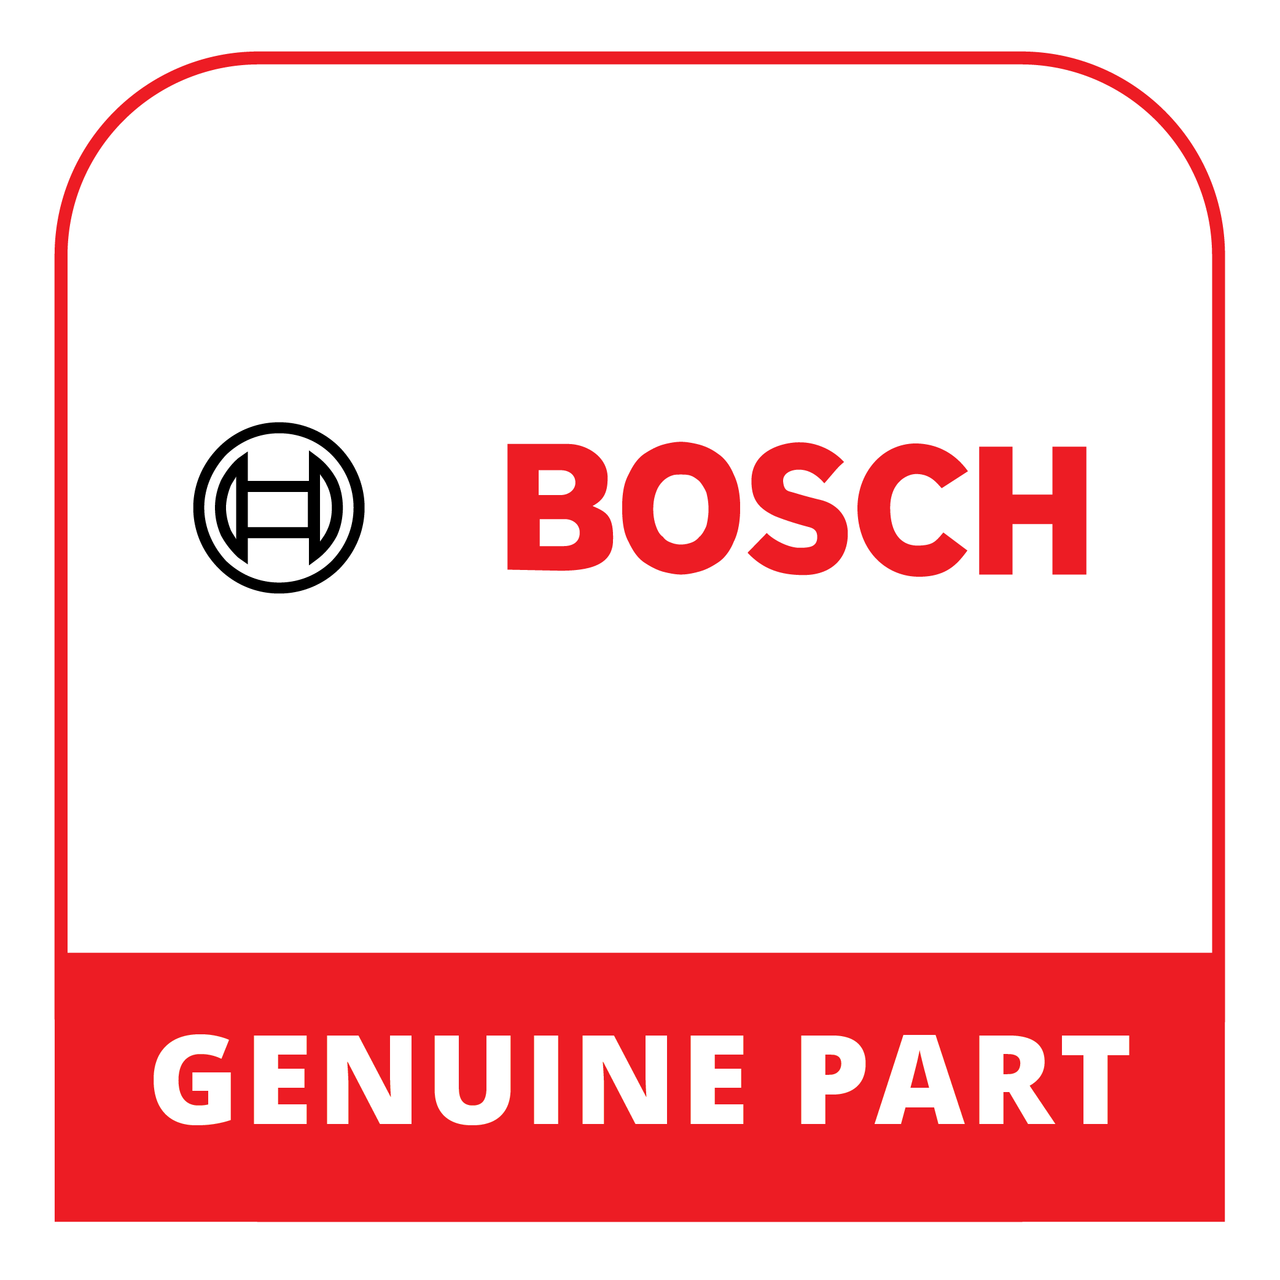 Bosch (Thermador) 11031791 - Hose - Genuine Bosch (Thermador) Part